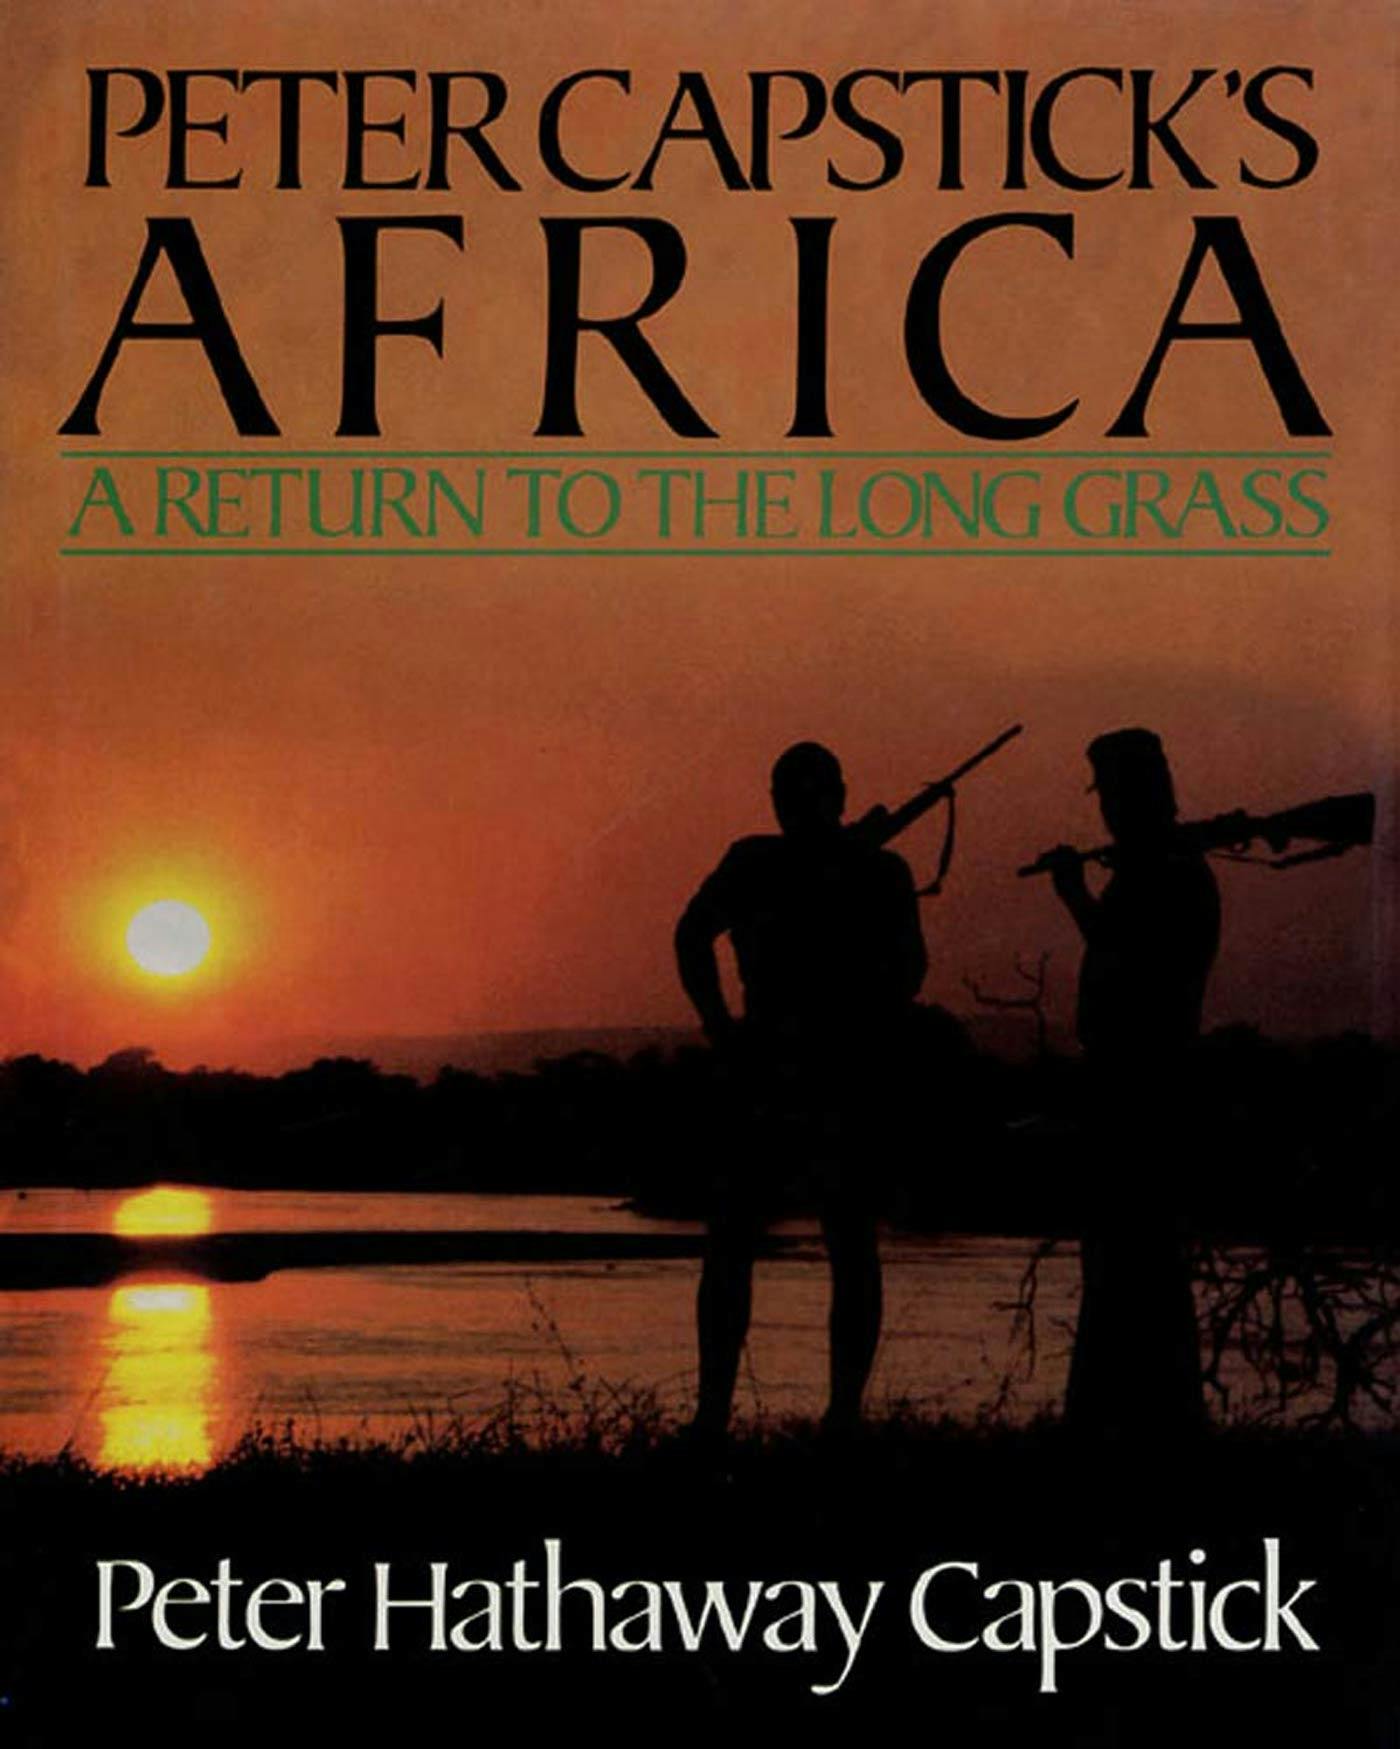 Peter Capsticks Africa photo